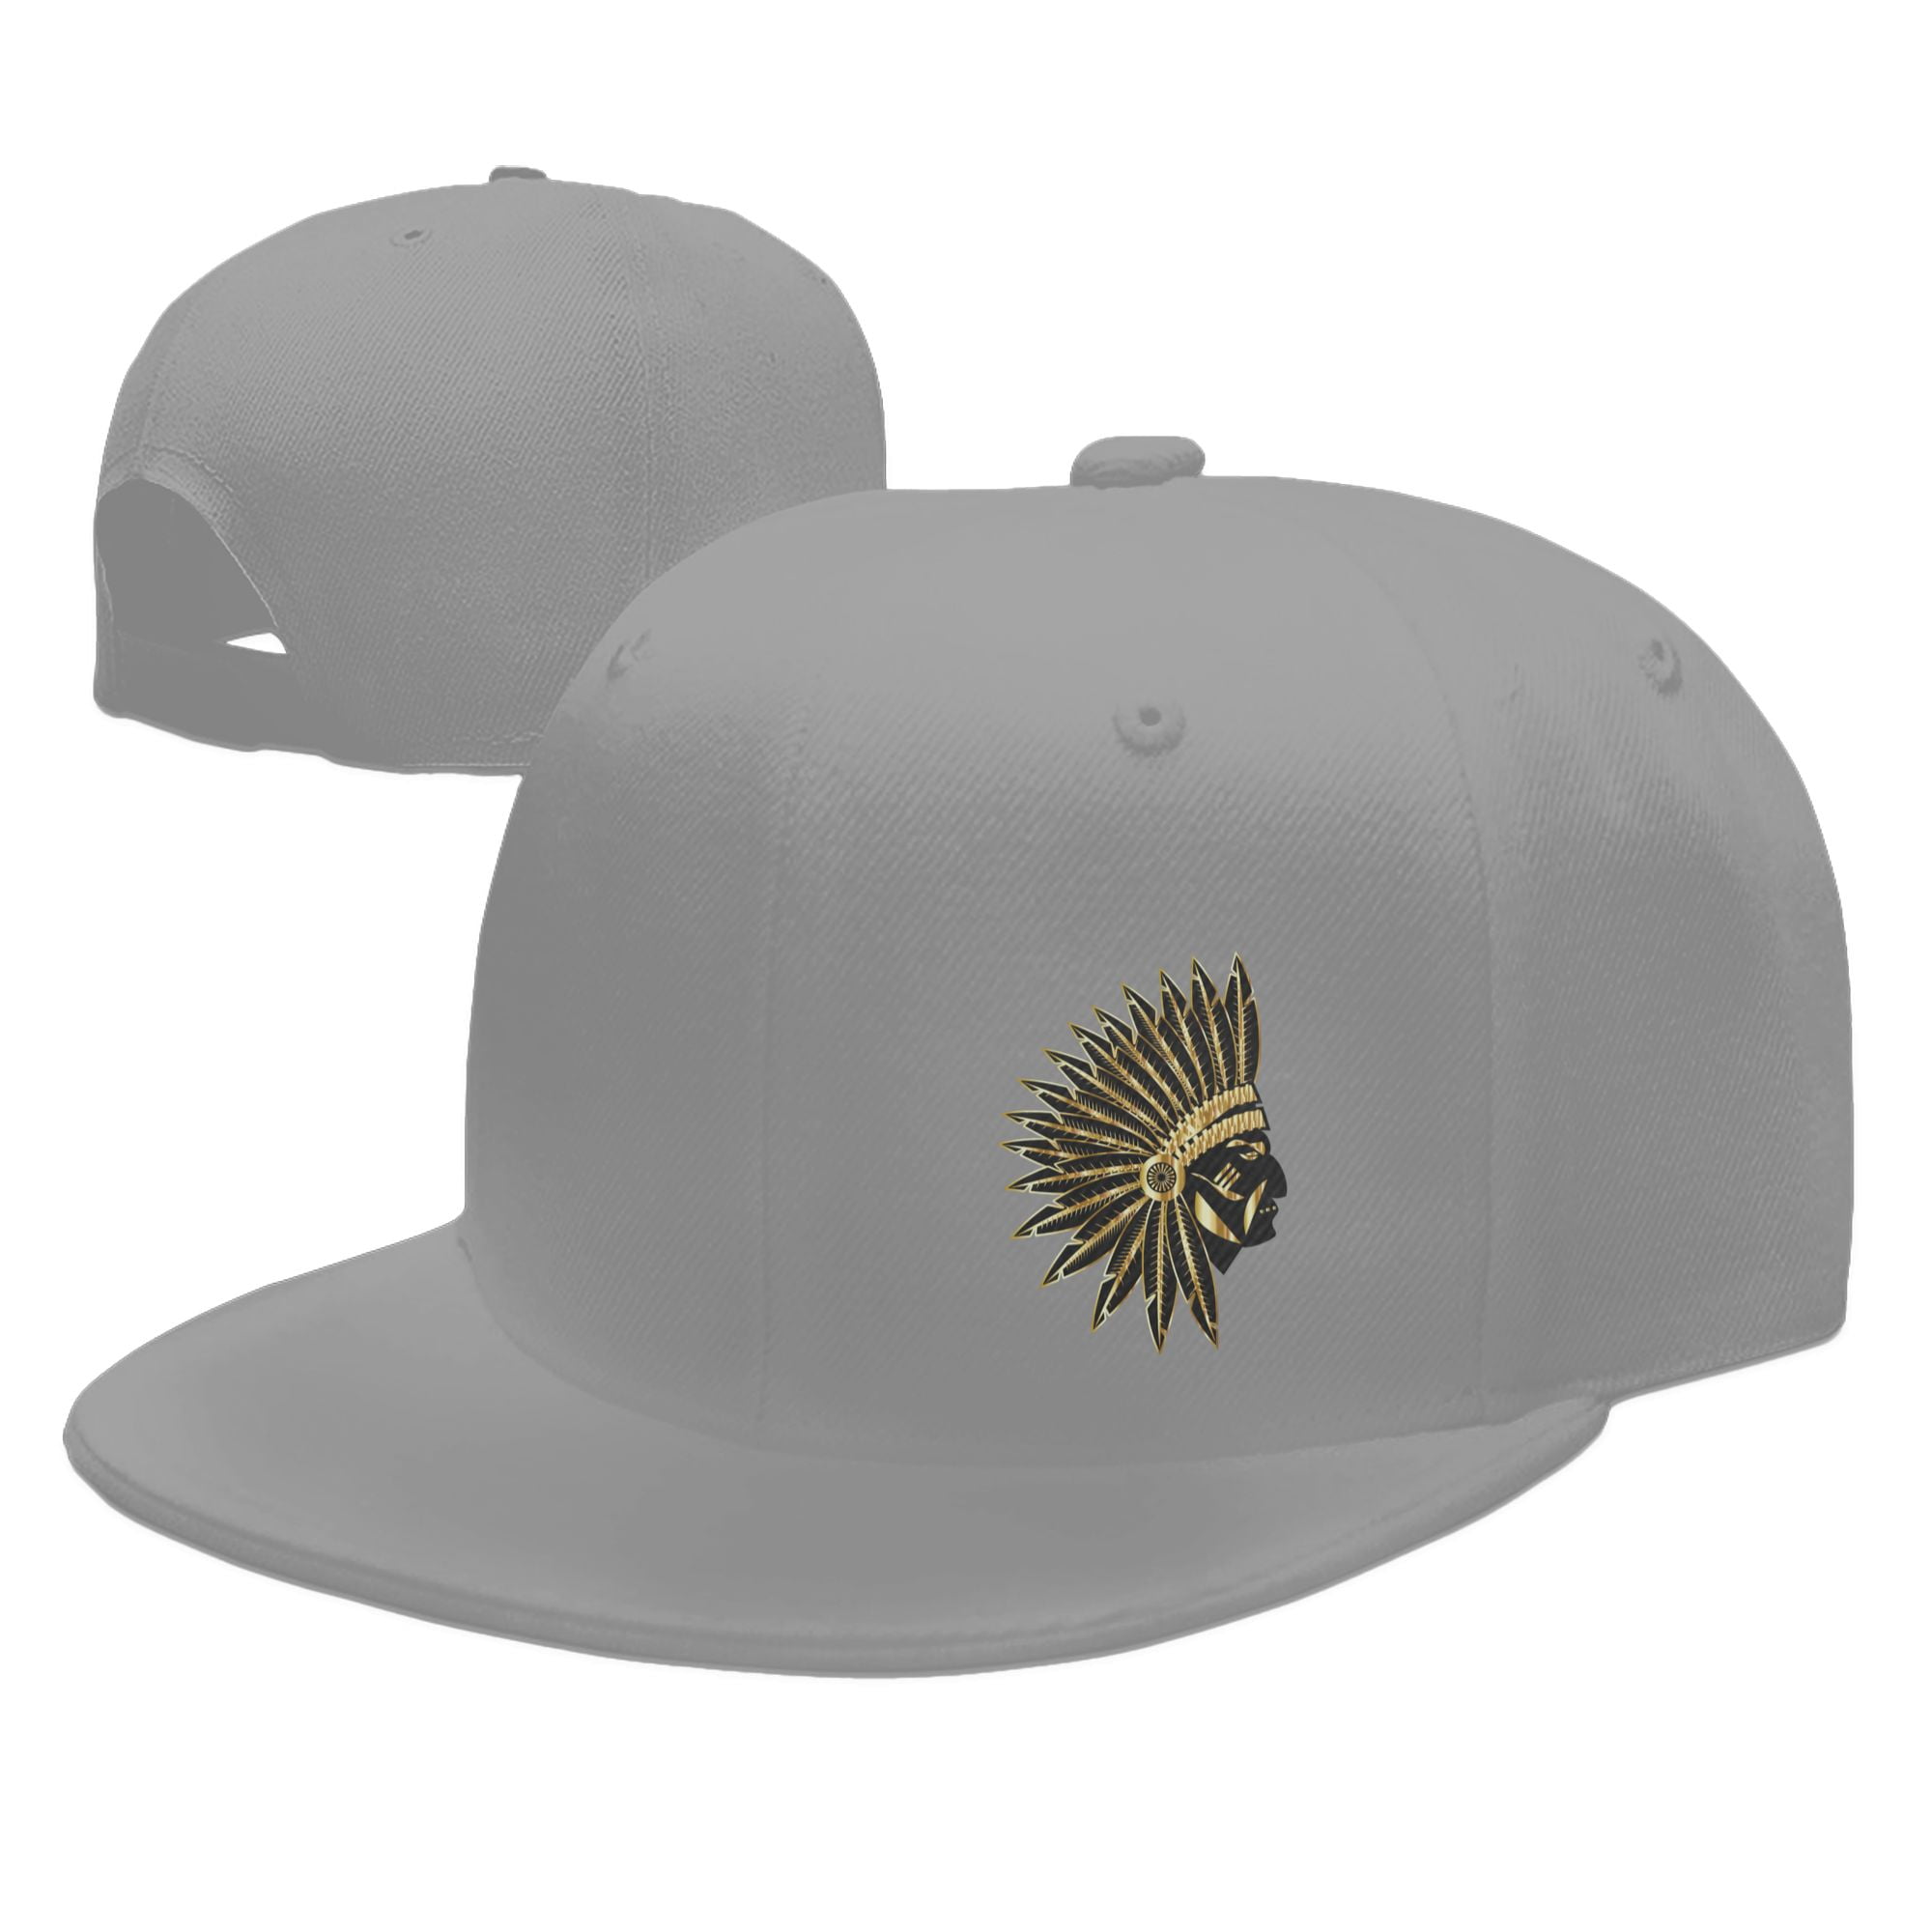 DouZhe Flat Brim Cap Snapback Hat, Gold Native American Feathers Prints  Adjustable Gray Adult Baseball Cap 